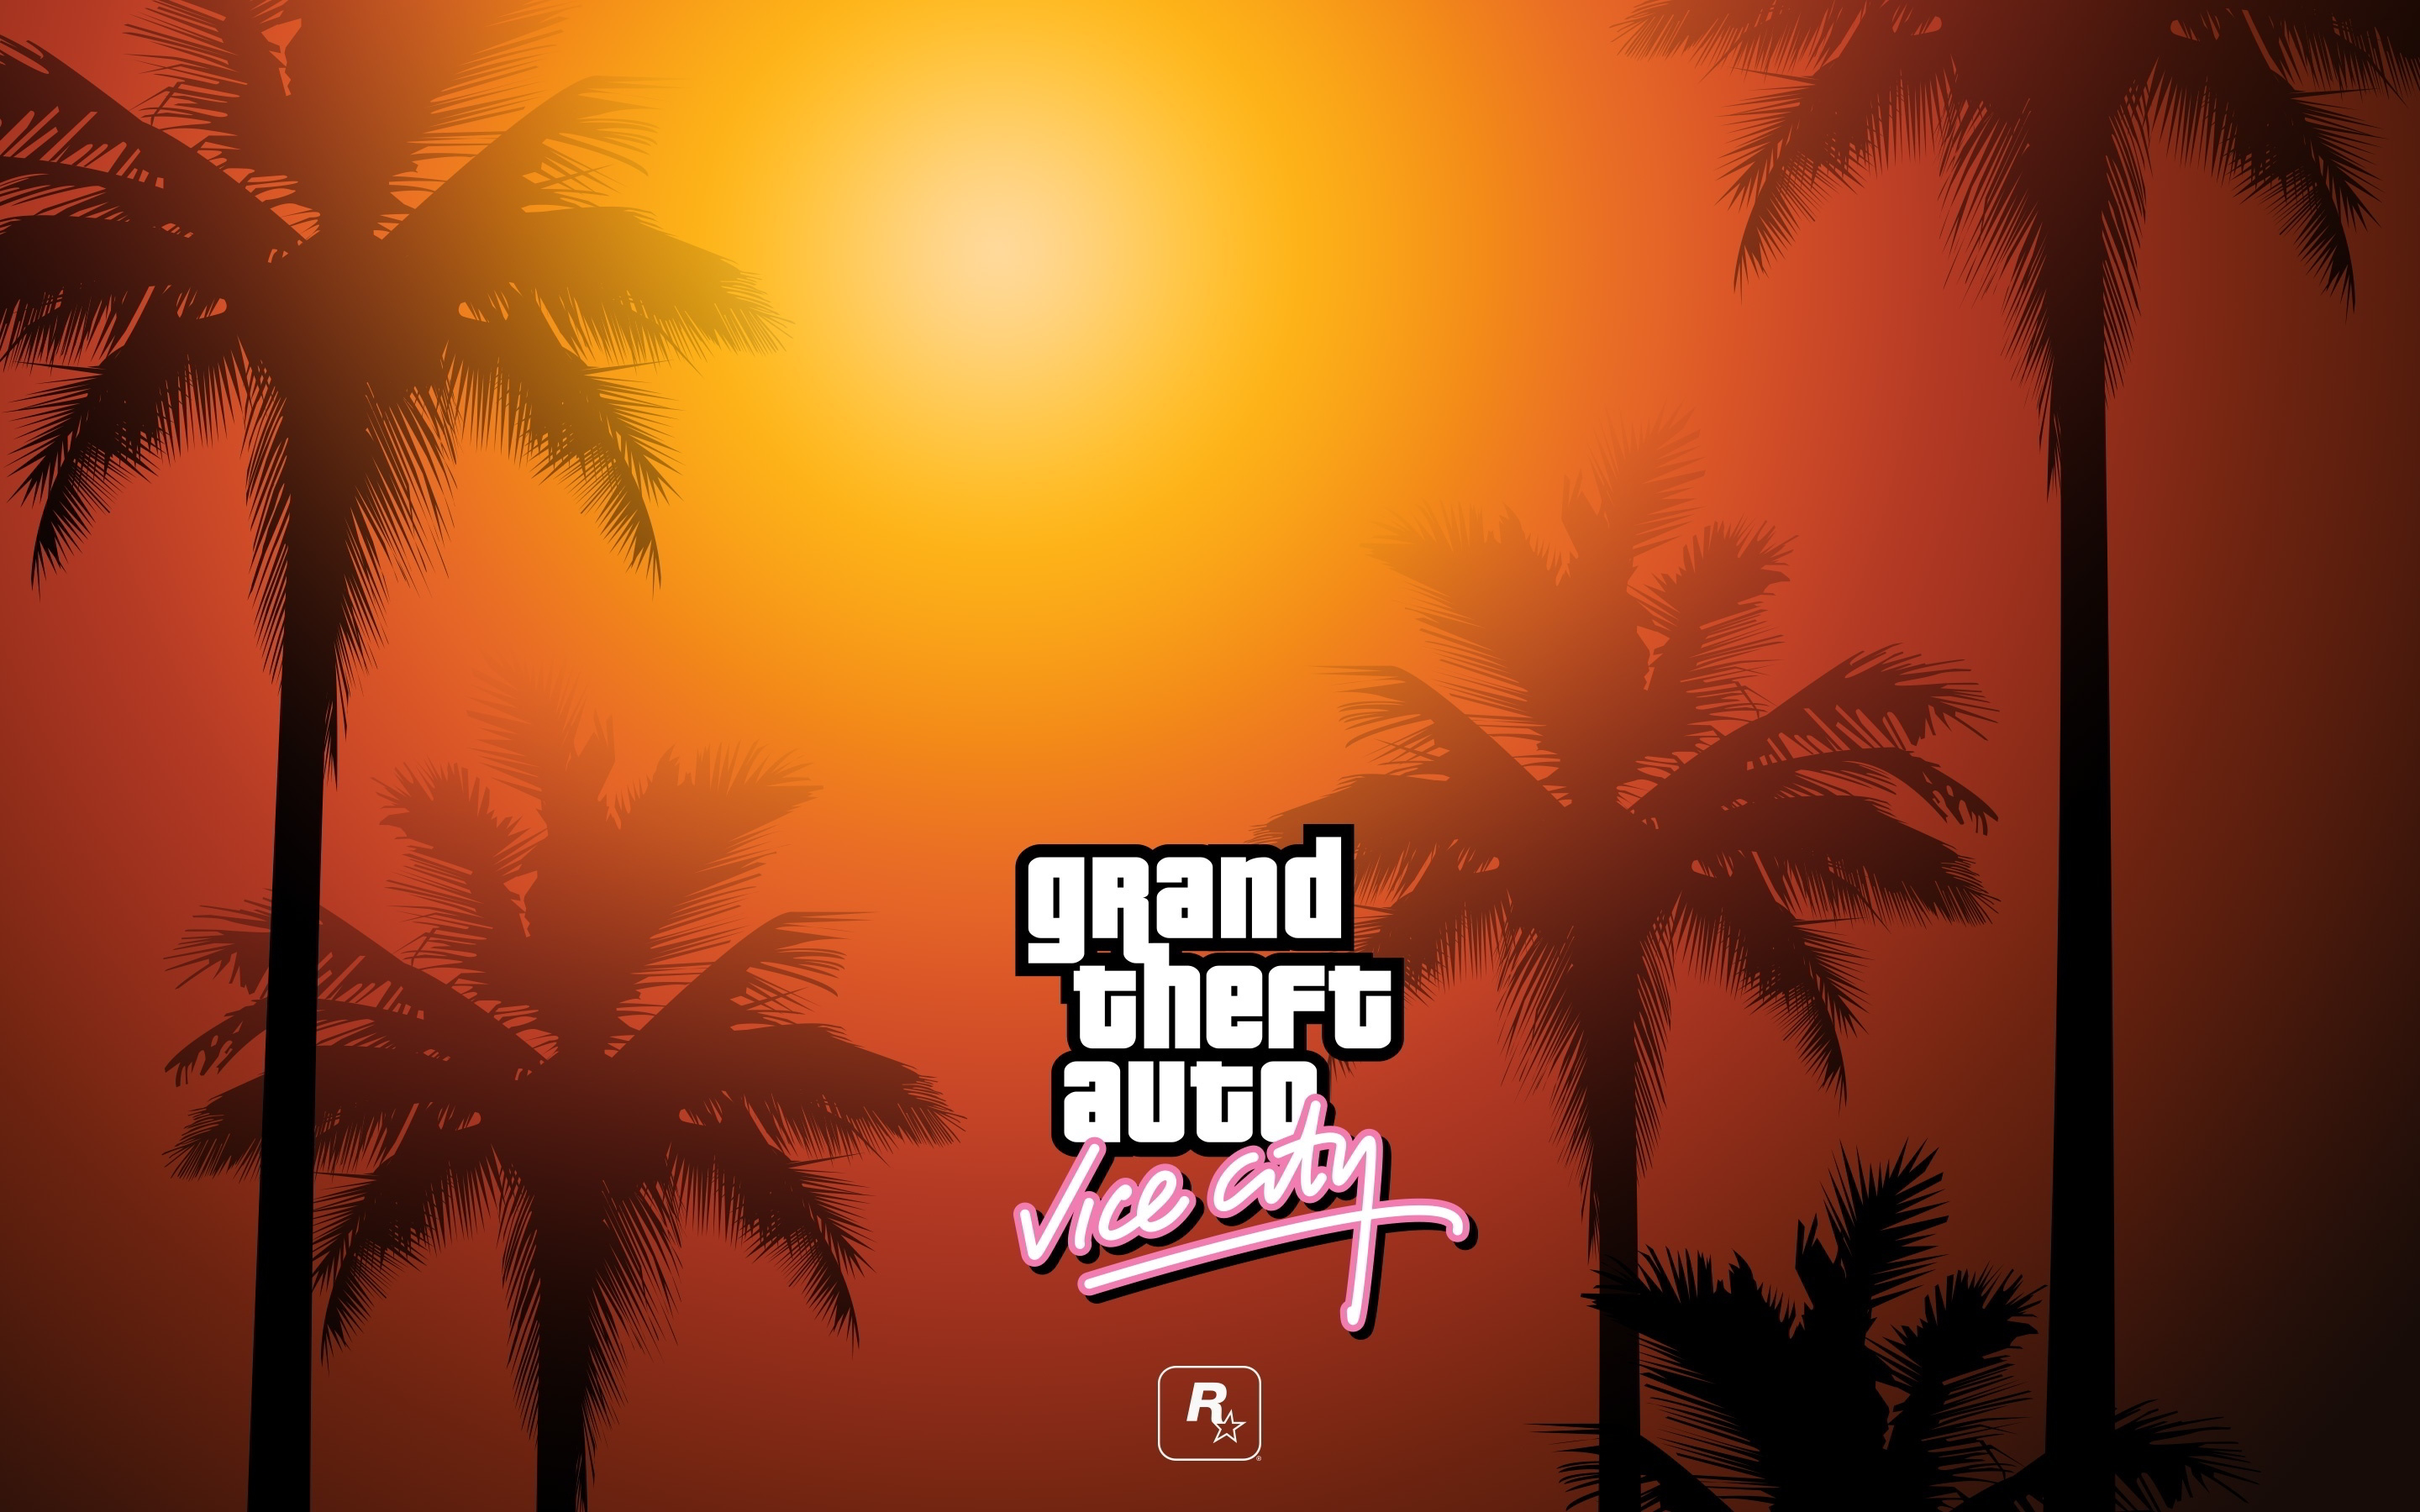 Grand theft auto vice city (Wallpaper > Grand Theft Auto: Vice City)